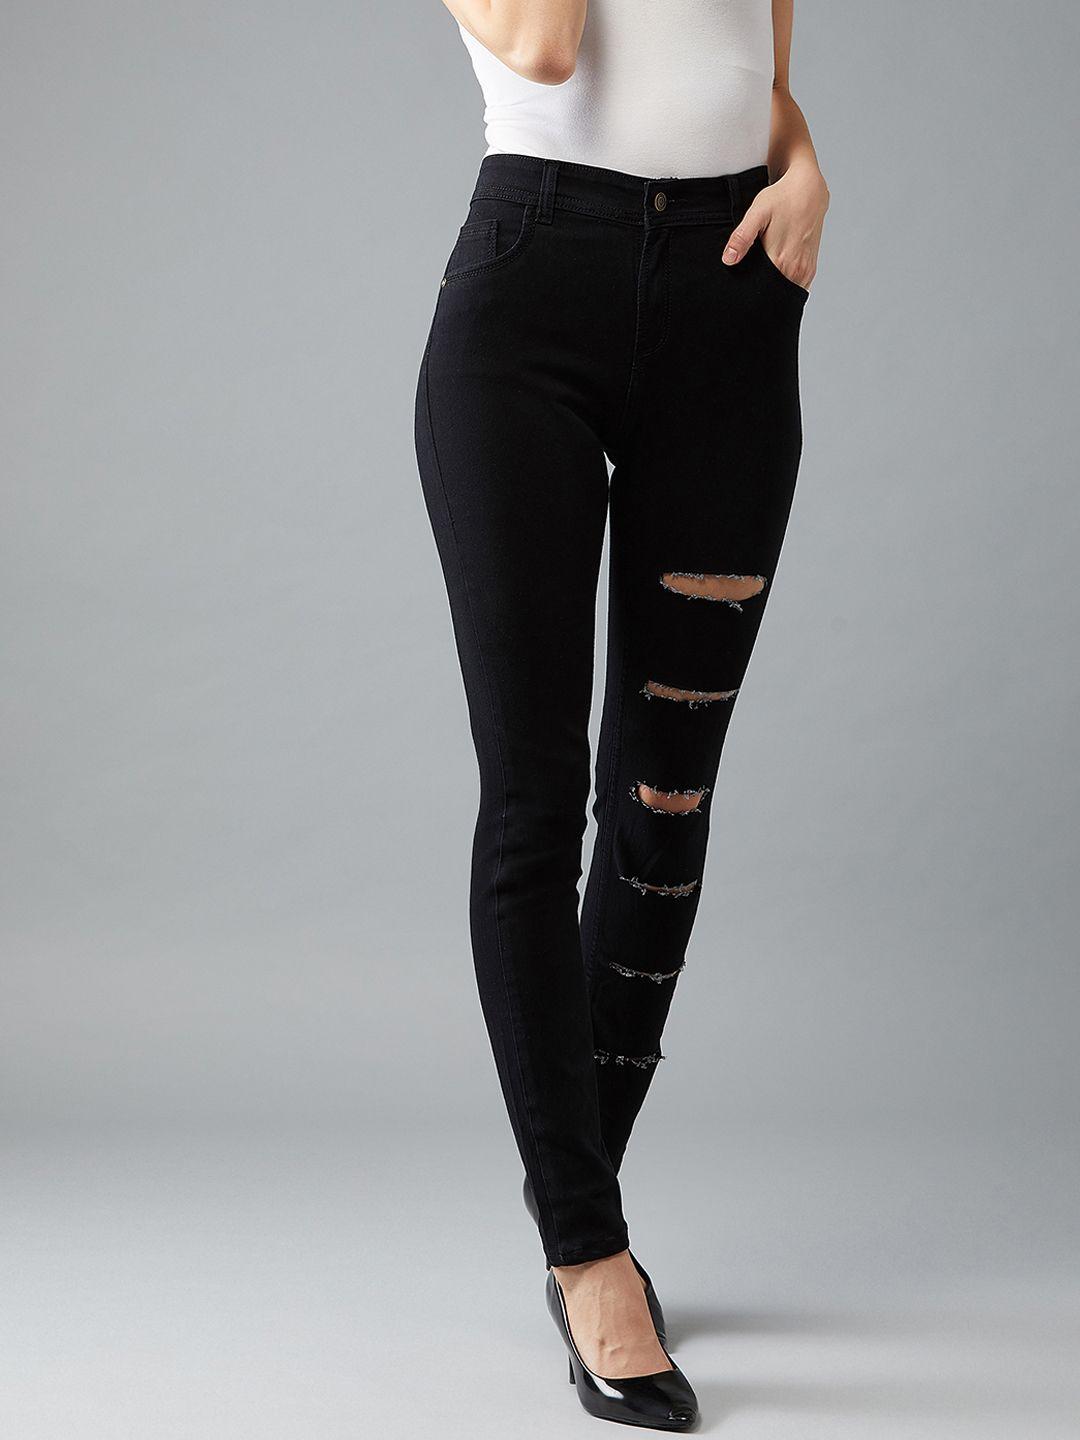 dolce-crudo-women-black-slim-fit-jeans